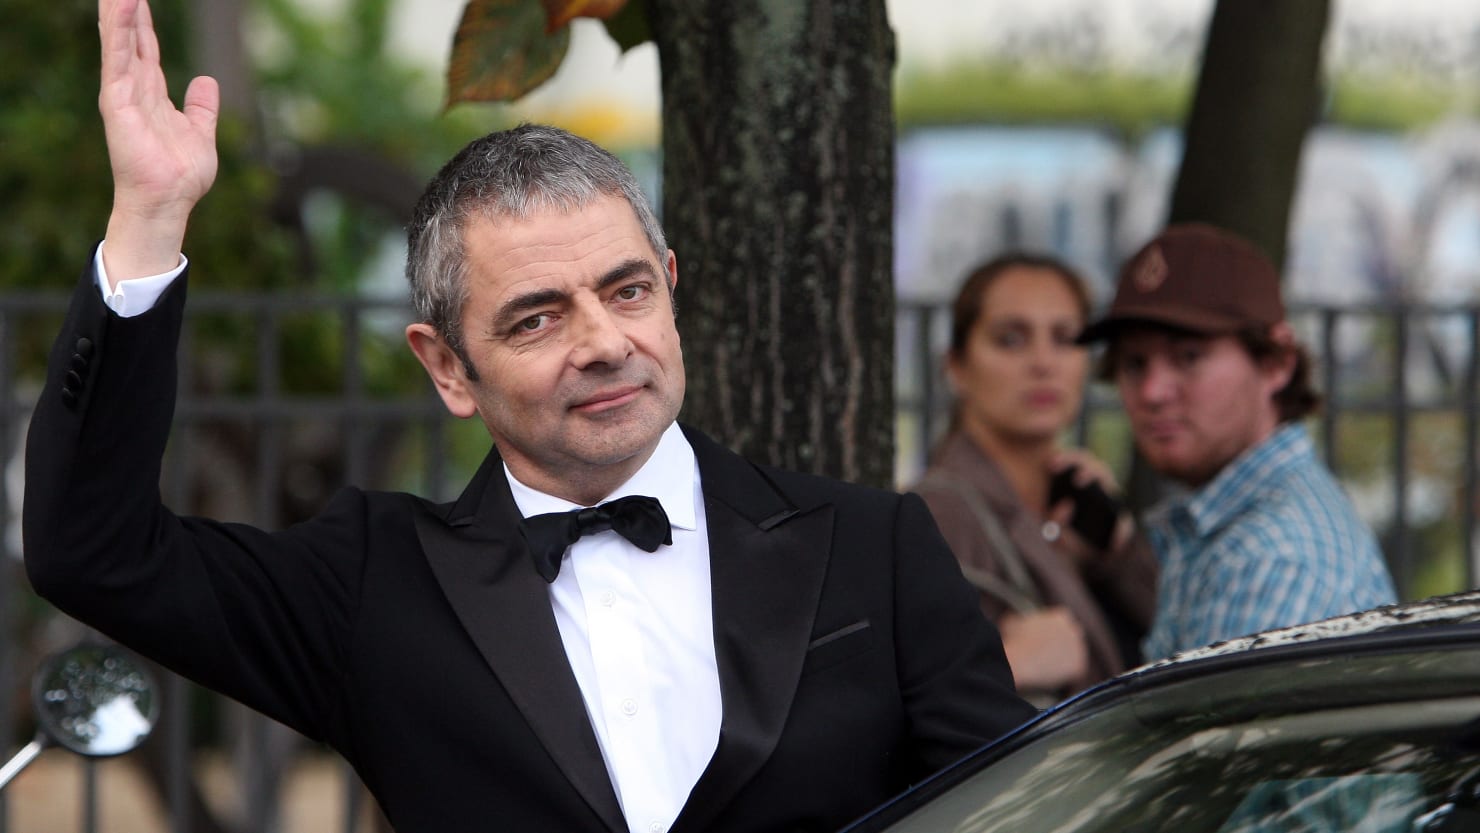 Rowan Atkinson, aka Mr. Bean, wants to cancel ‘Cancel culture’